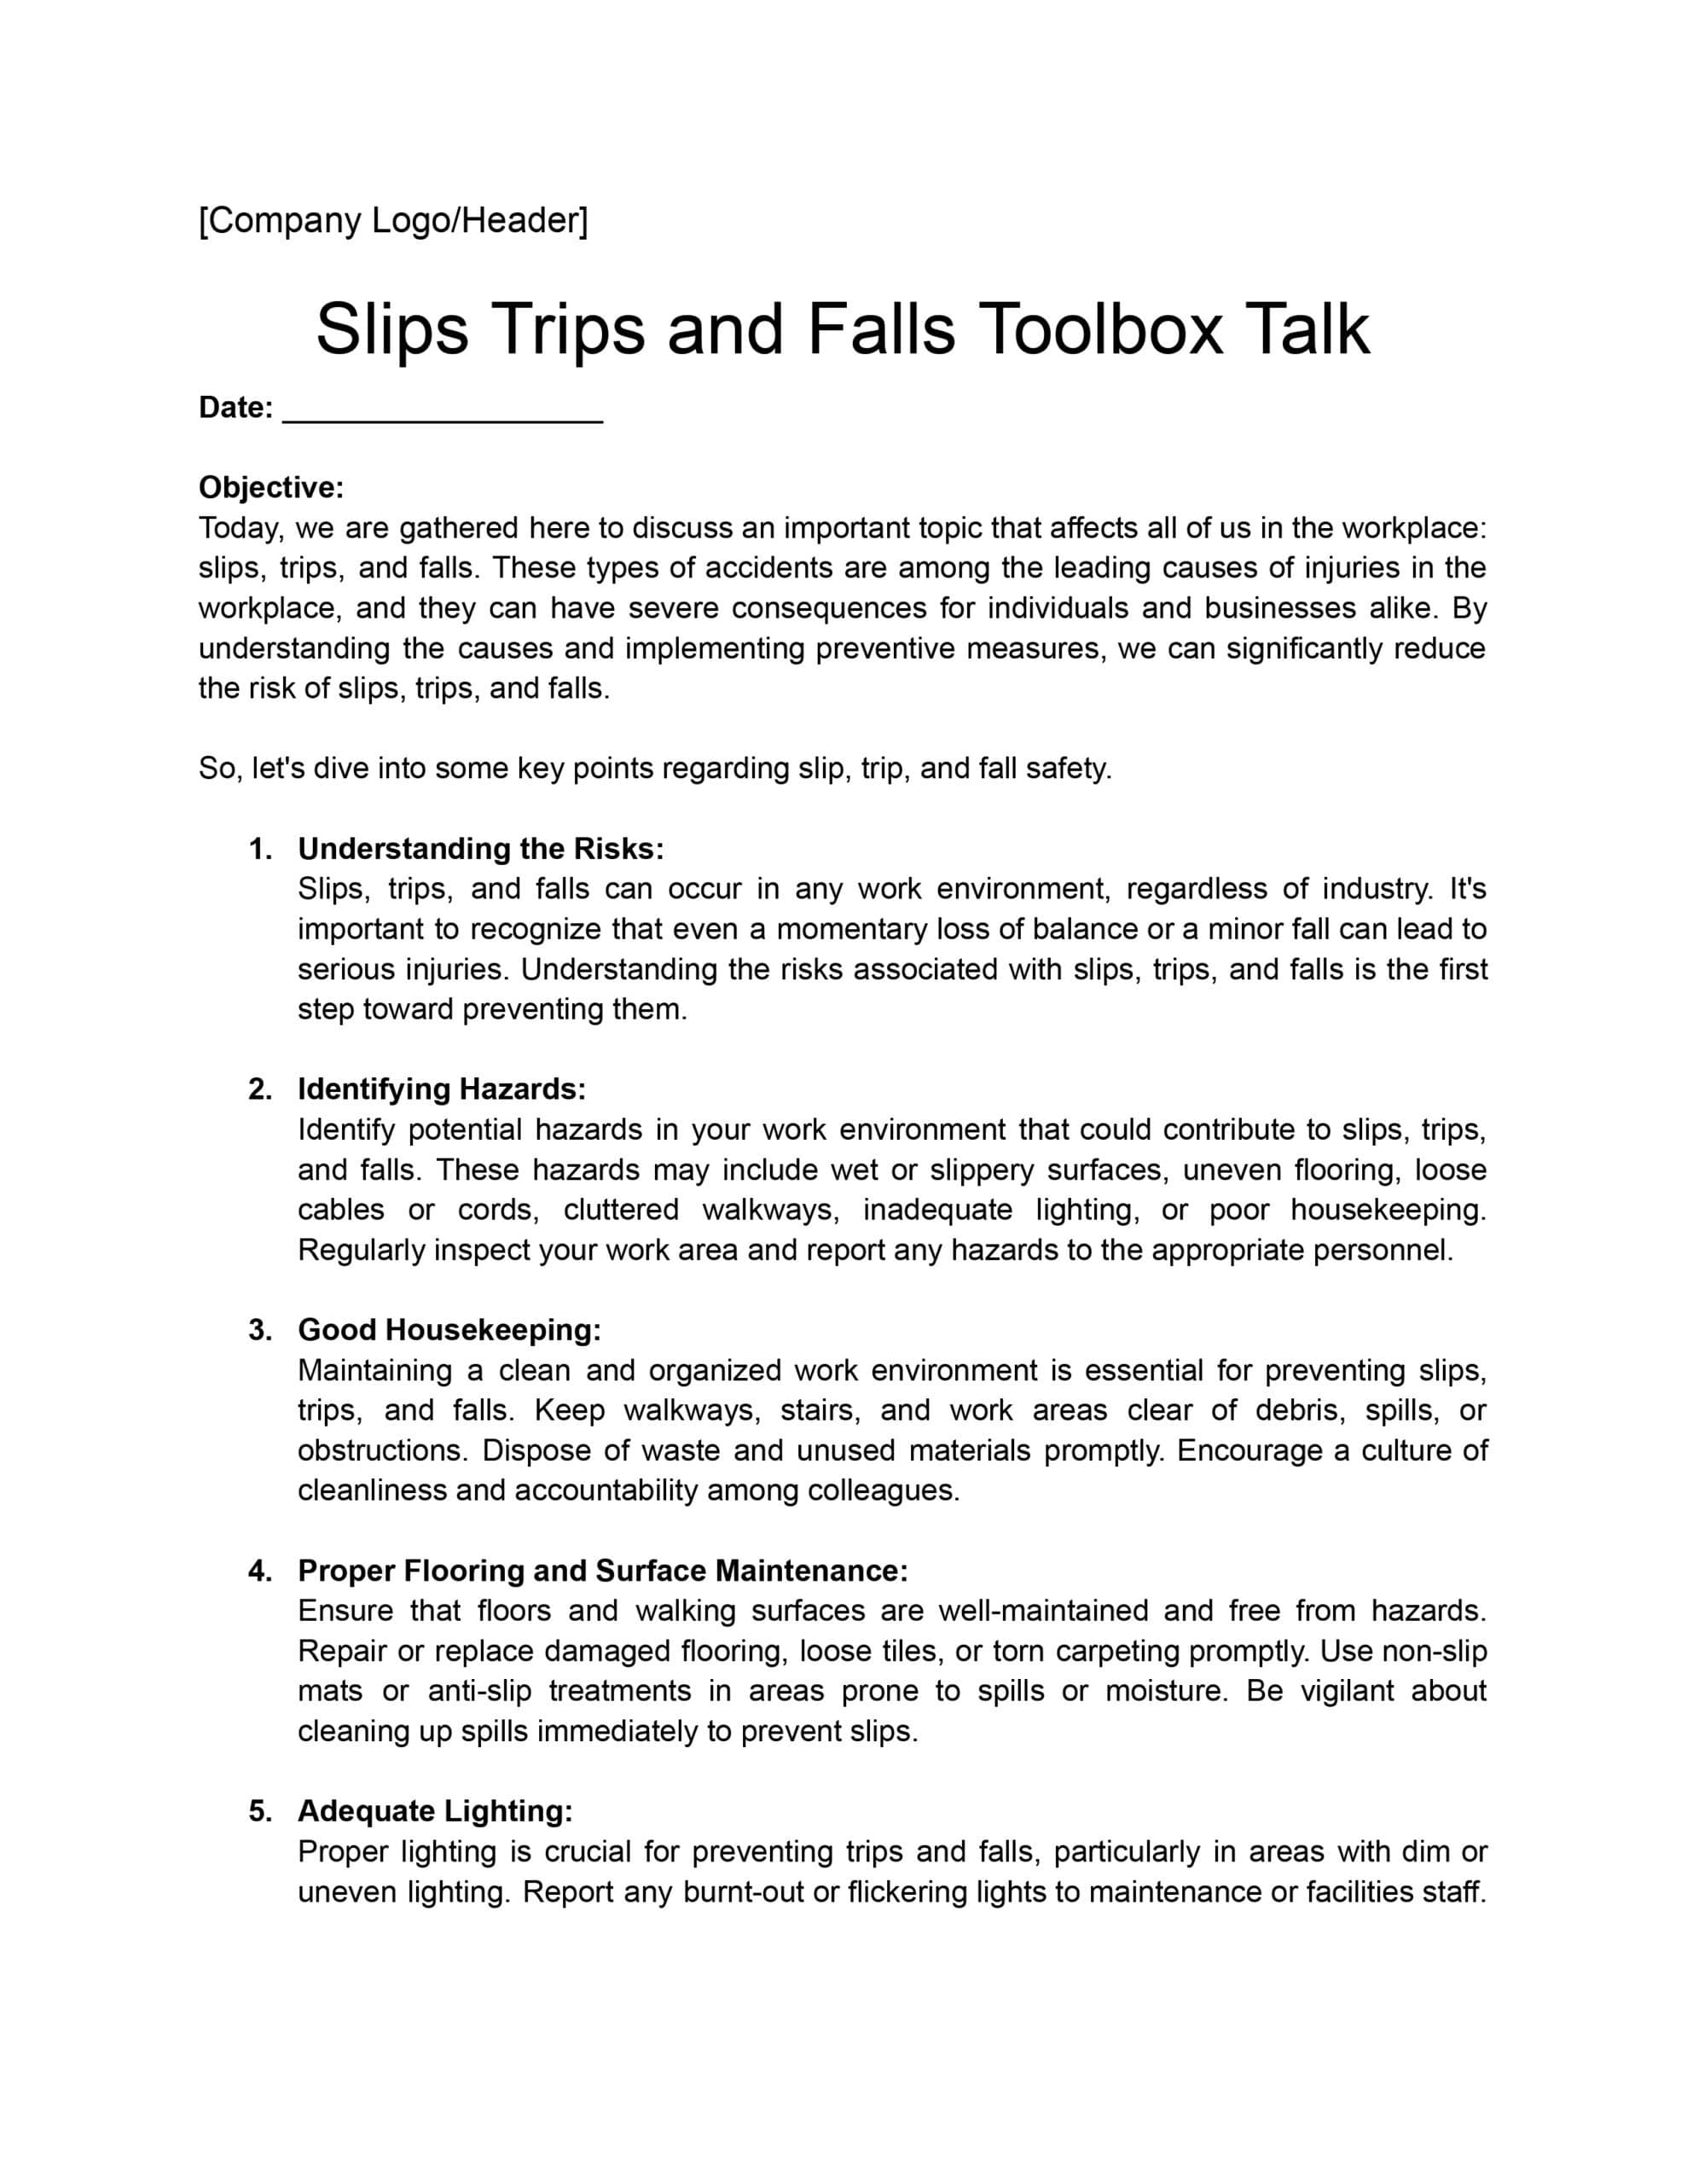 Slips Trips and Falls Toolbox Talk